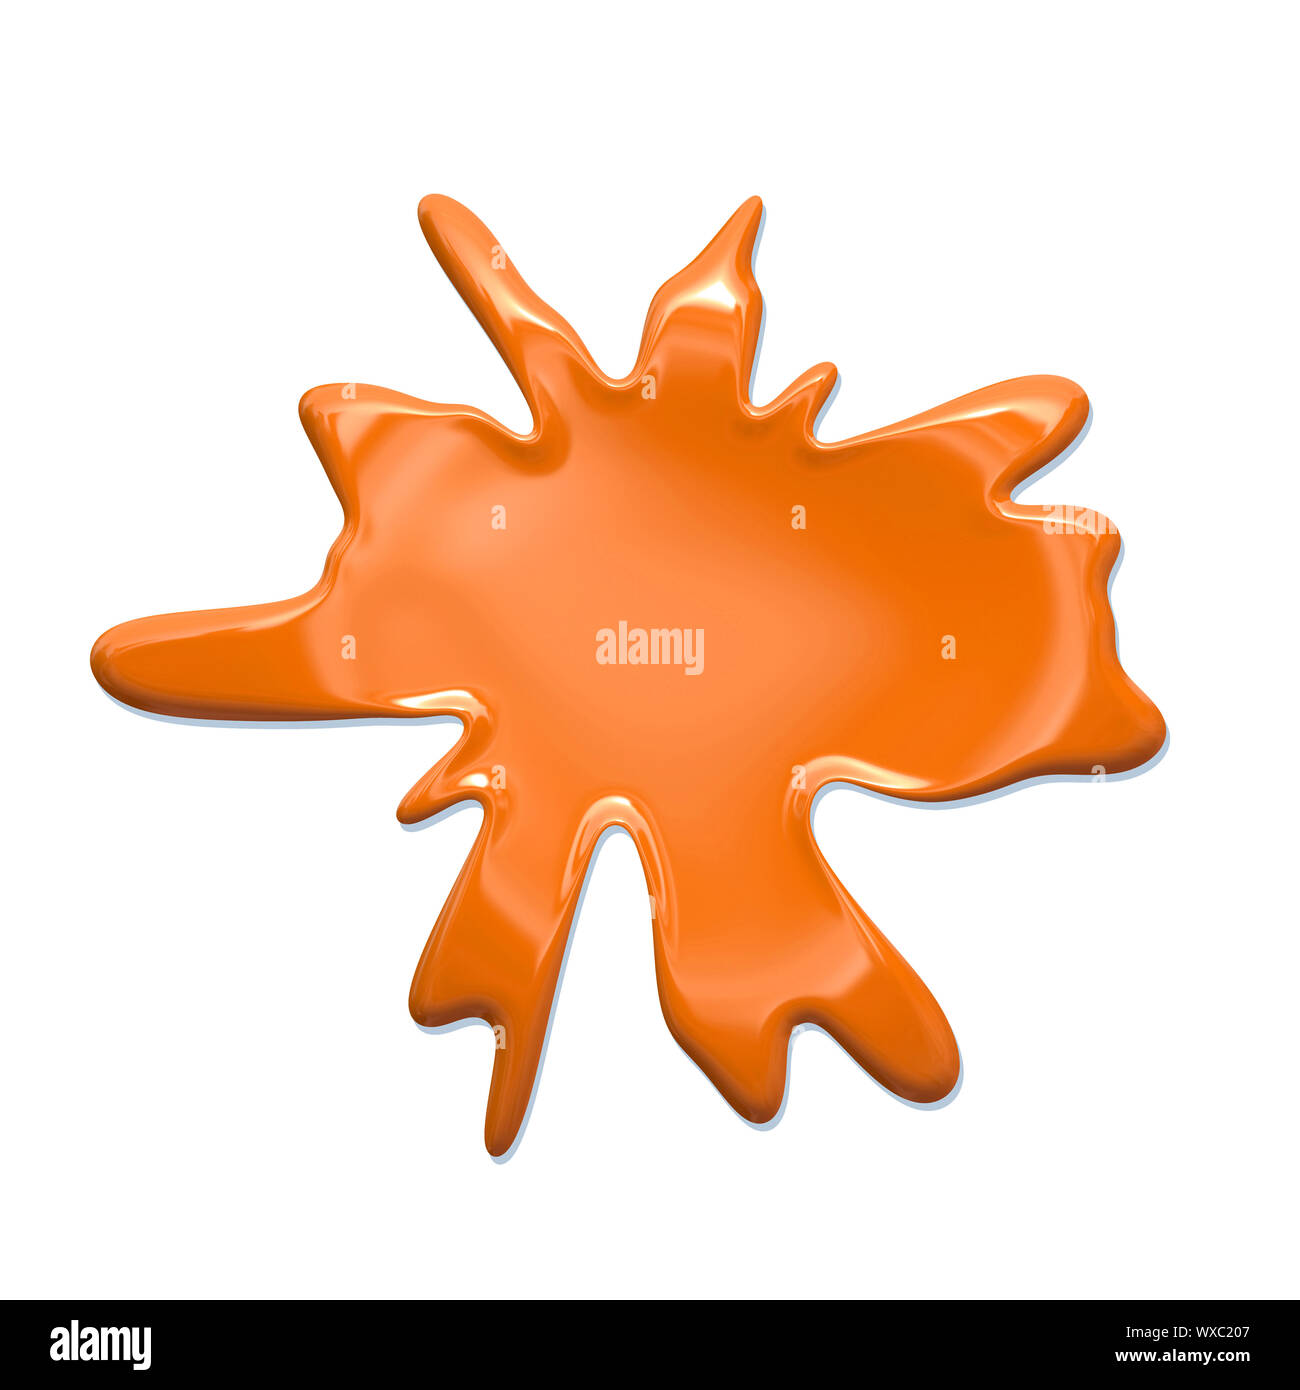 Blob Of Dripping Orange Paint On White Background Stock Photo